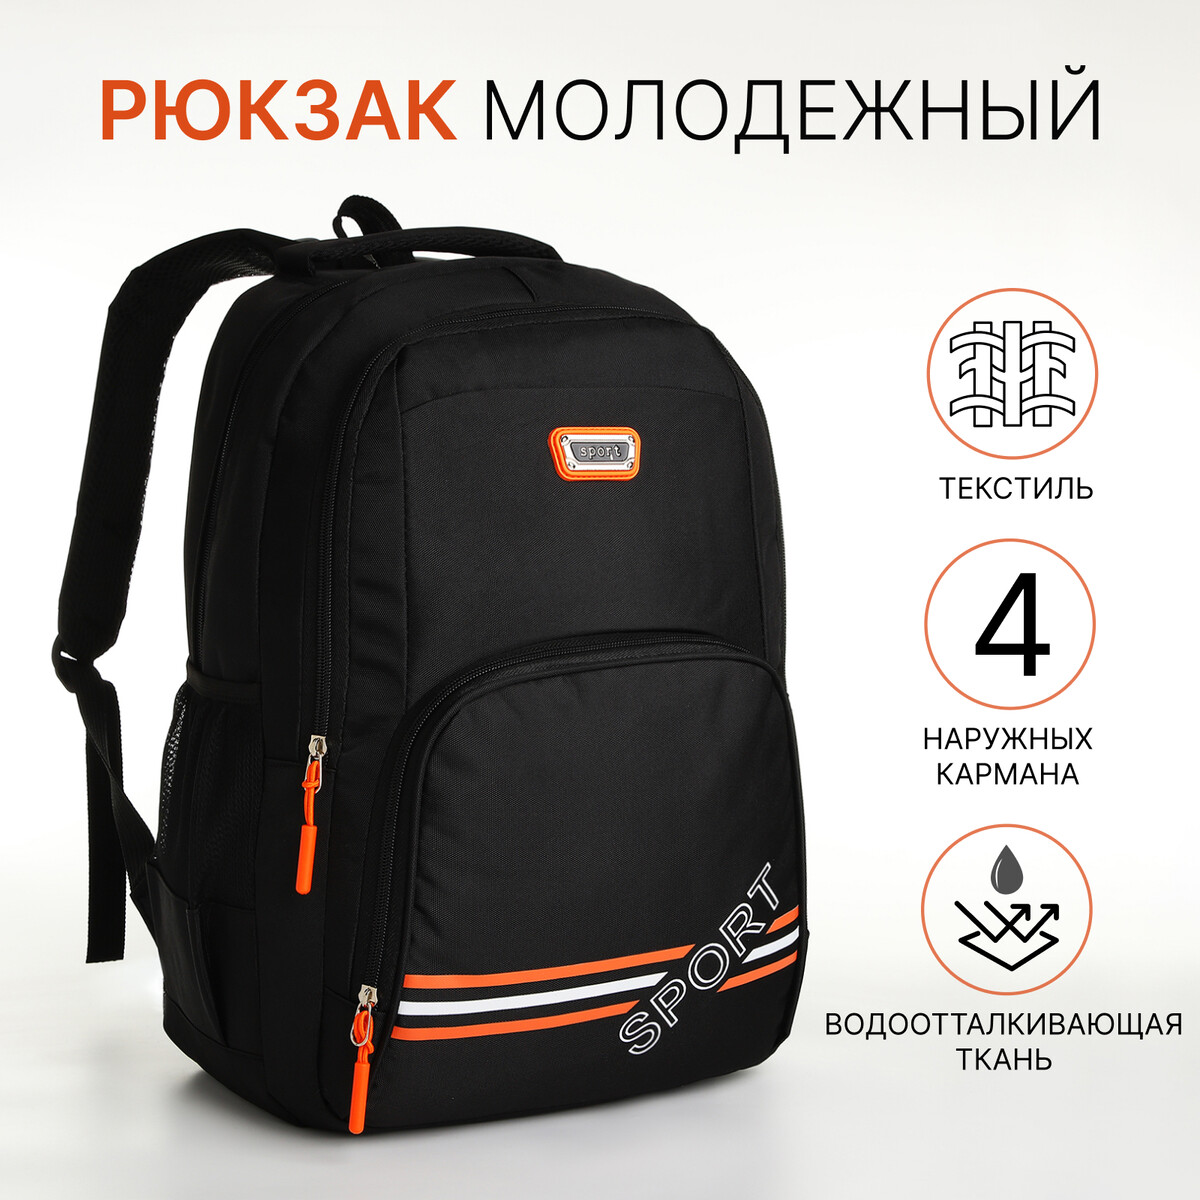 Рюкзак молодежный на молнии, 4 кармана, цвет черный/оранжевый рюкзак молодежный из текстиля на молнии 4 кармана оранжевый